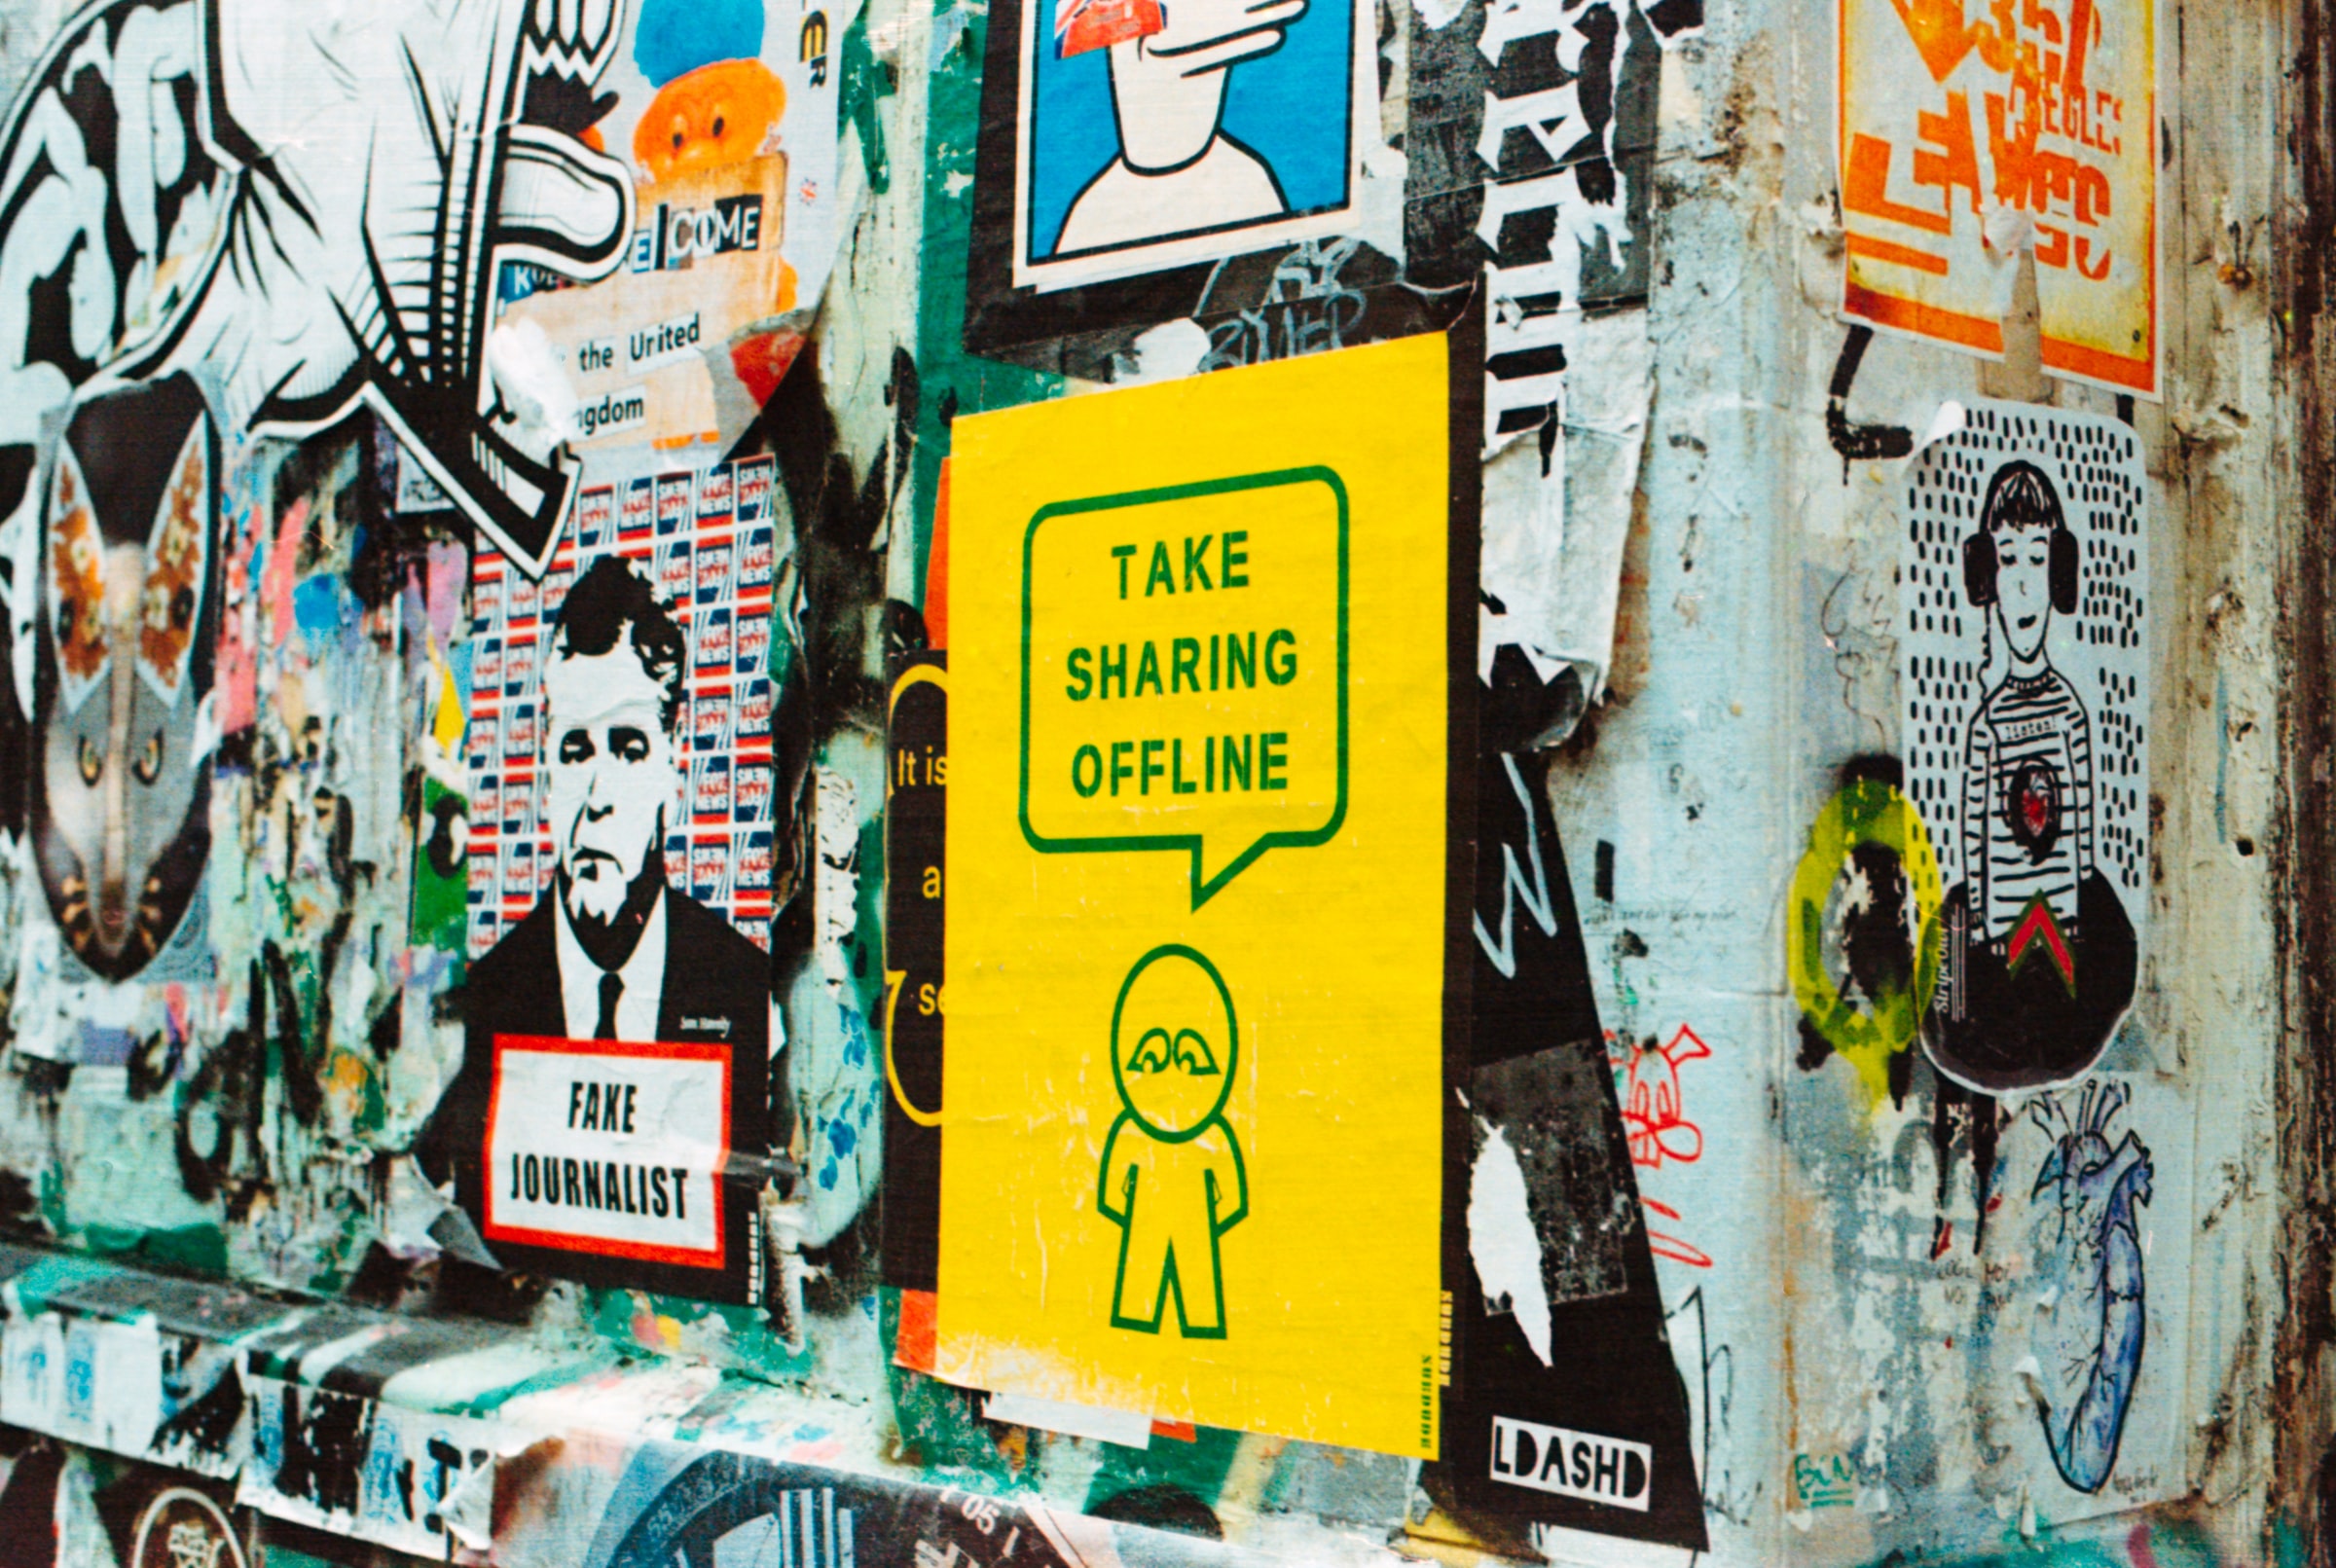 Take Sharing Offline. London Street art Shoreditch. Shot on film, Kodak Portra 800, Nikon FM2n